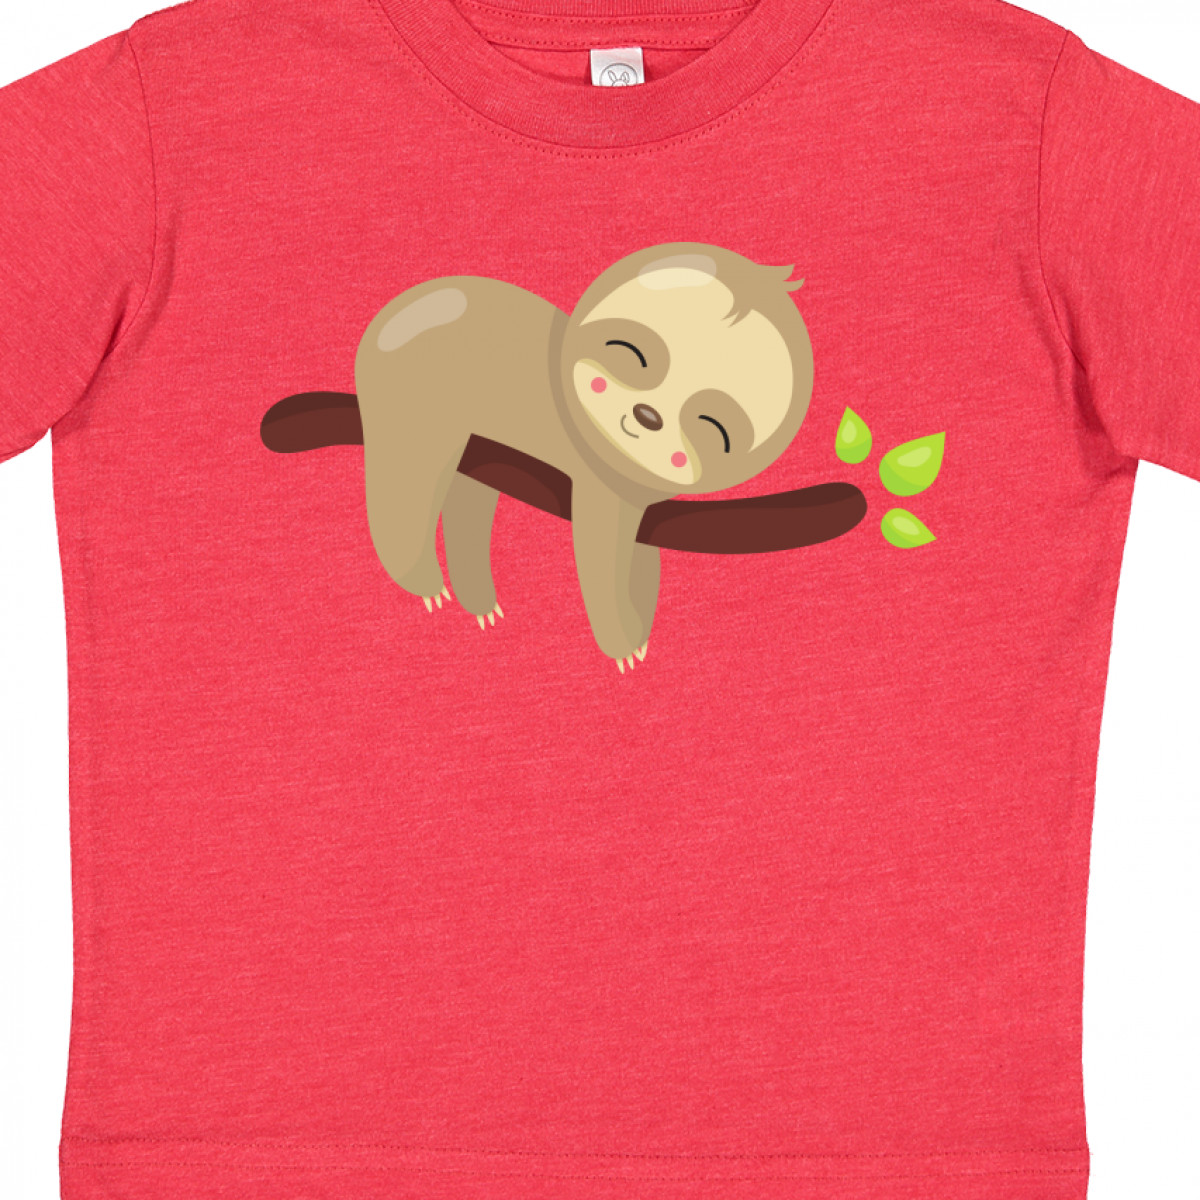 Inktastic Cute Sloth, Baby Sloth, Lazy Sloth, Sleeping Sloth Boys or Girls Toddler T-Shirt - image 3 of 4